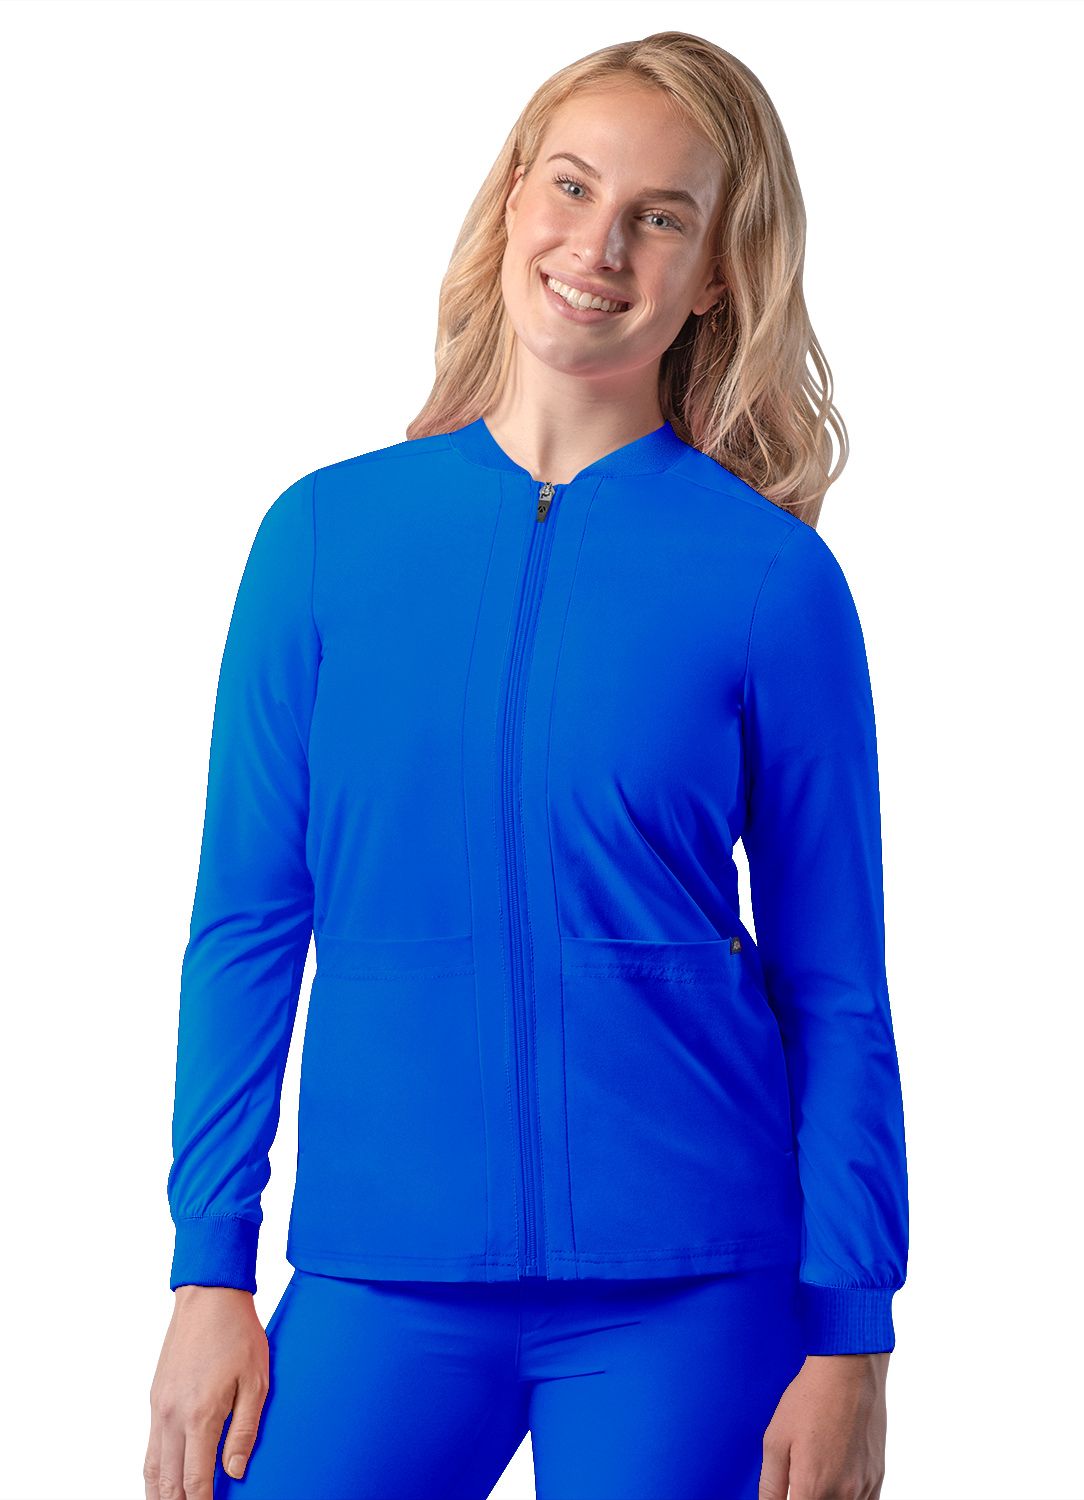 Addition Women's Bomber Zipped Jacket by Adar XXS-3XL / ROYAL BLUE